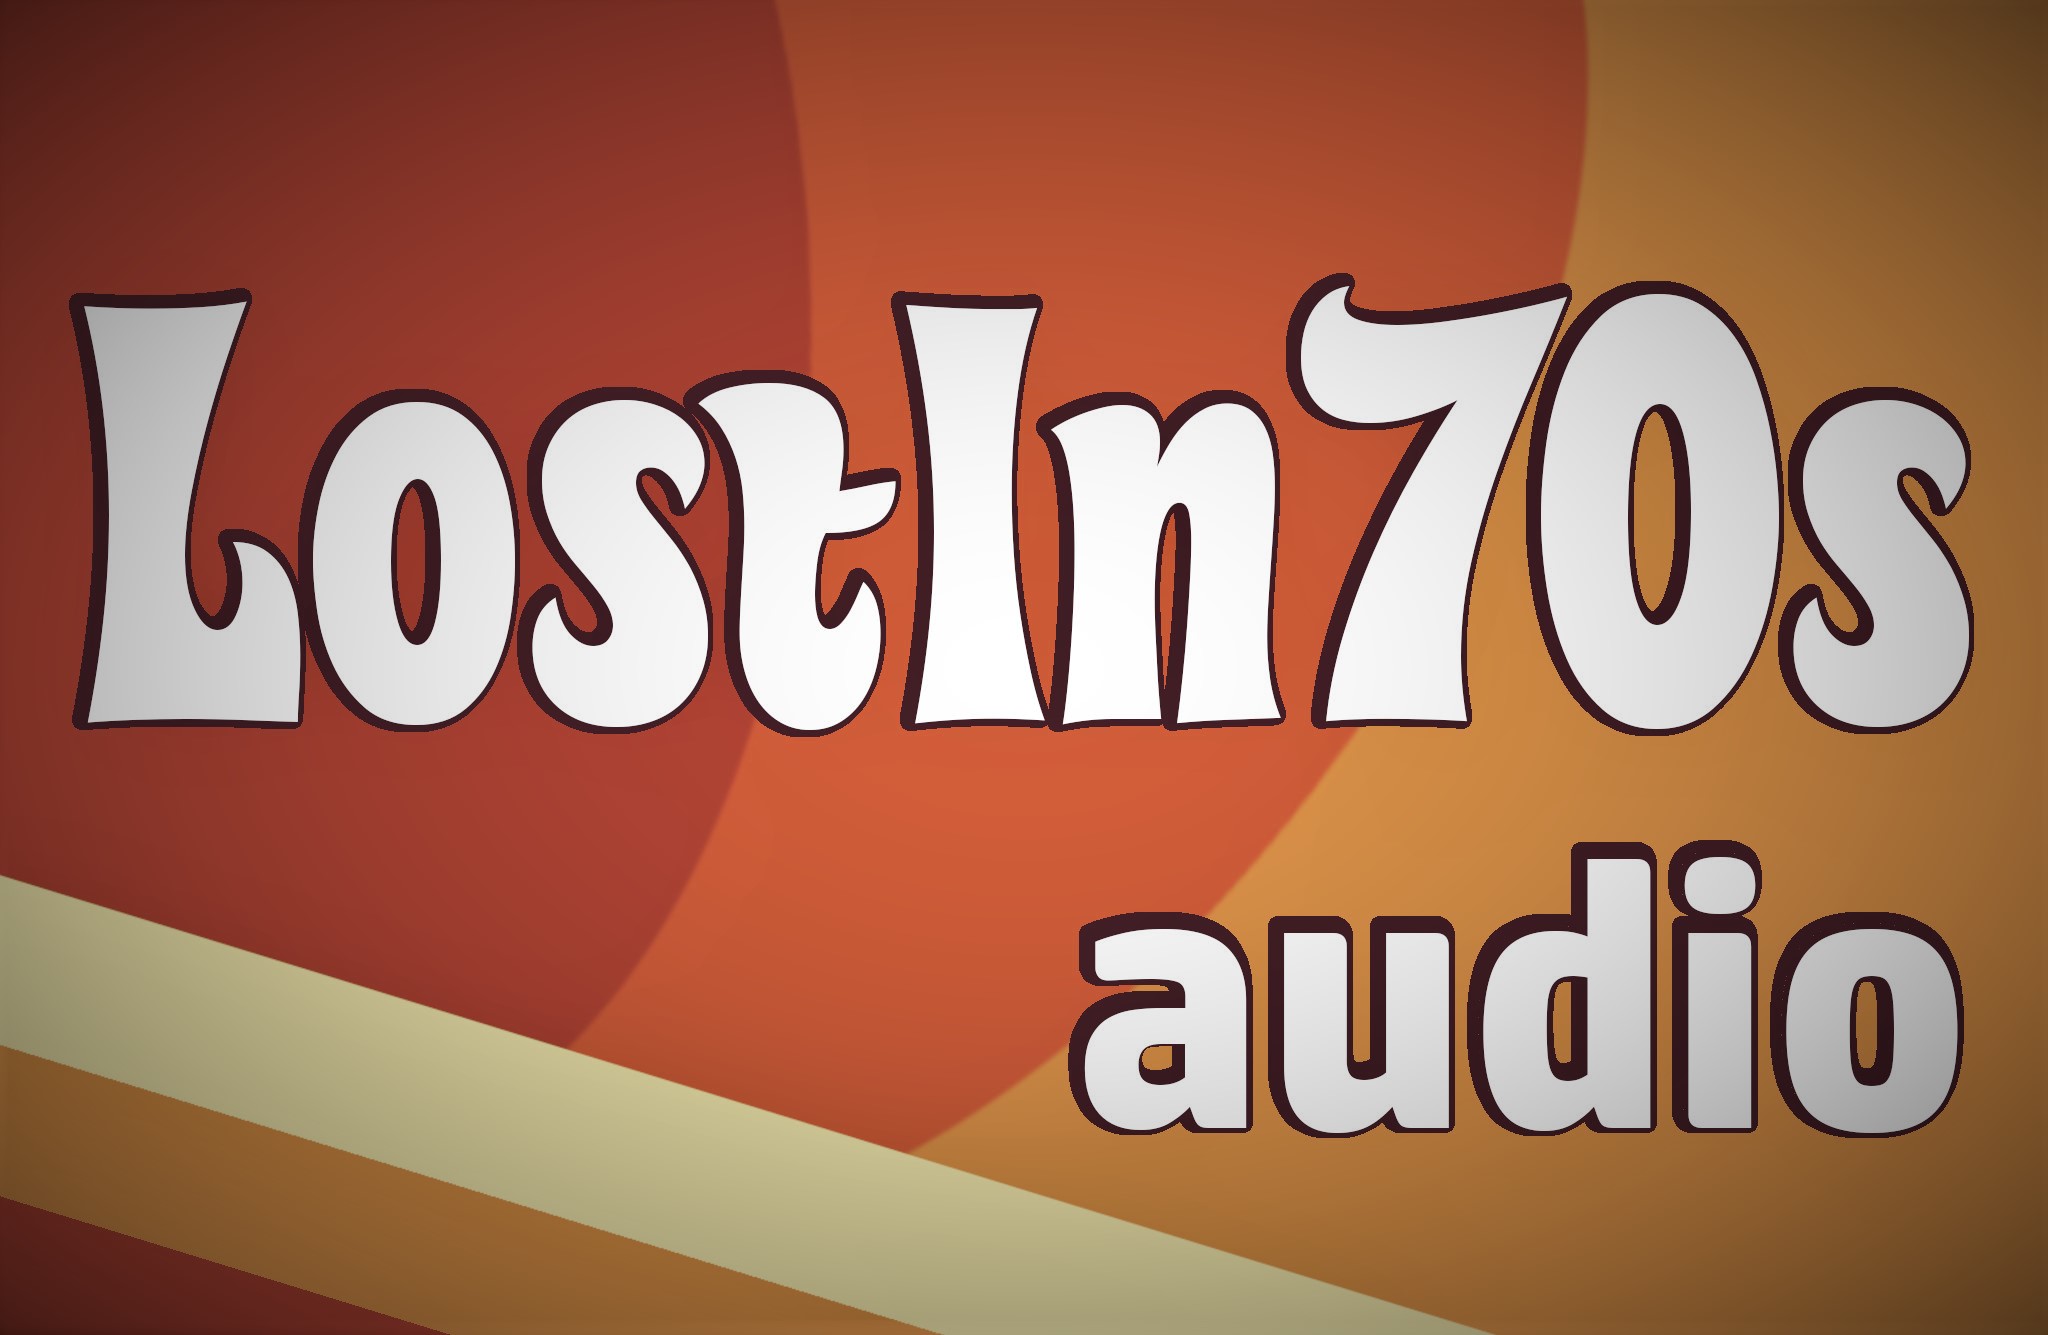 Lostin70s Audio